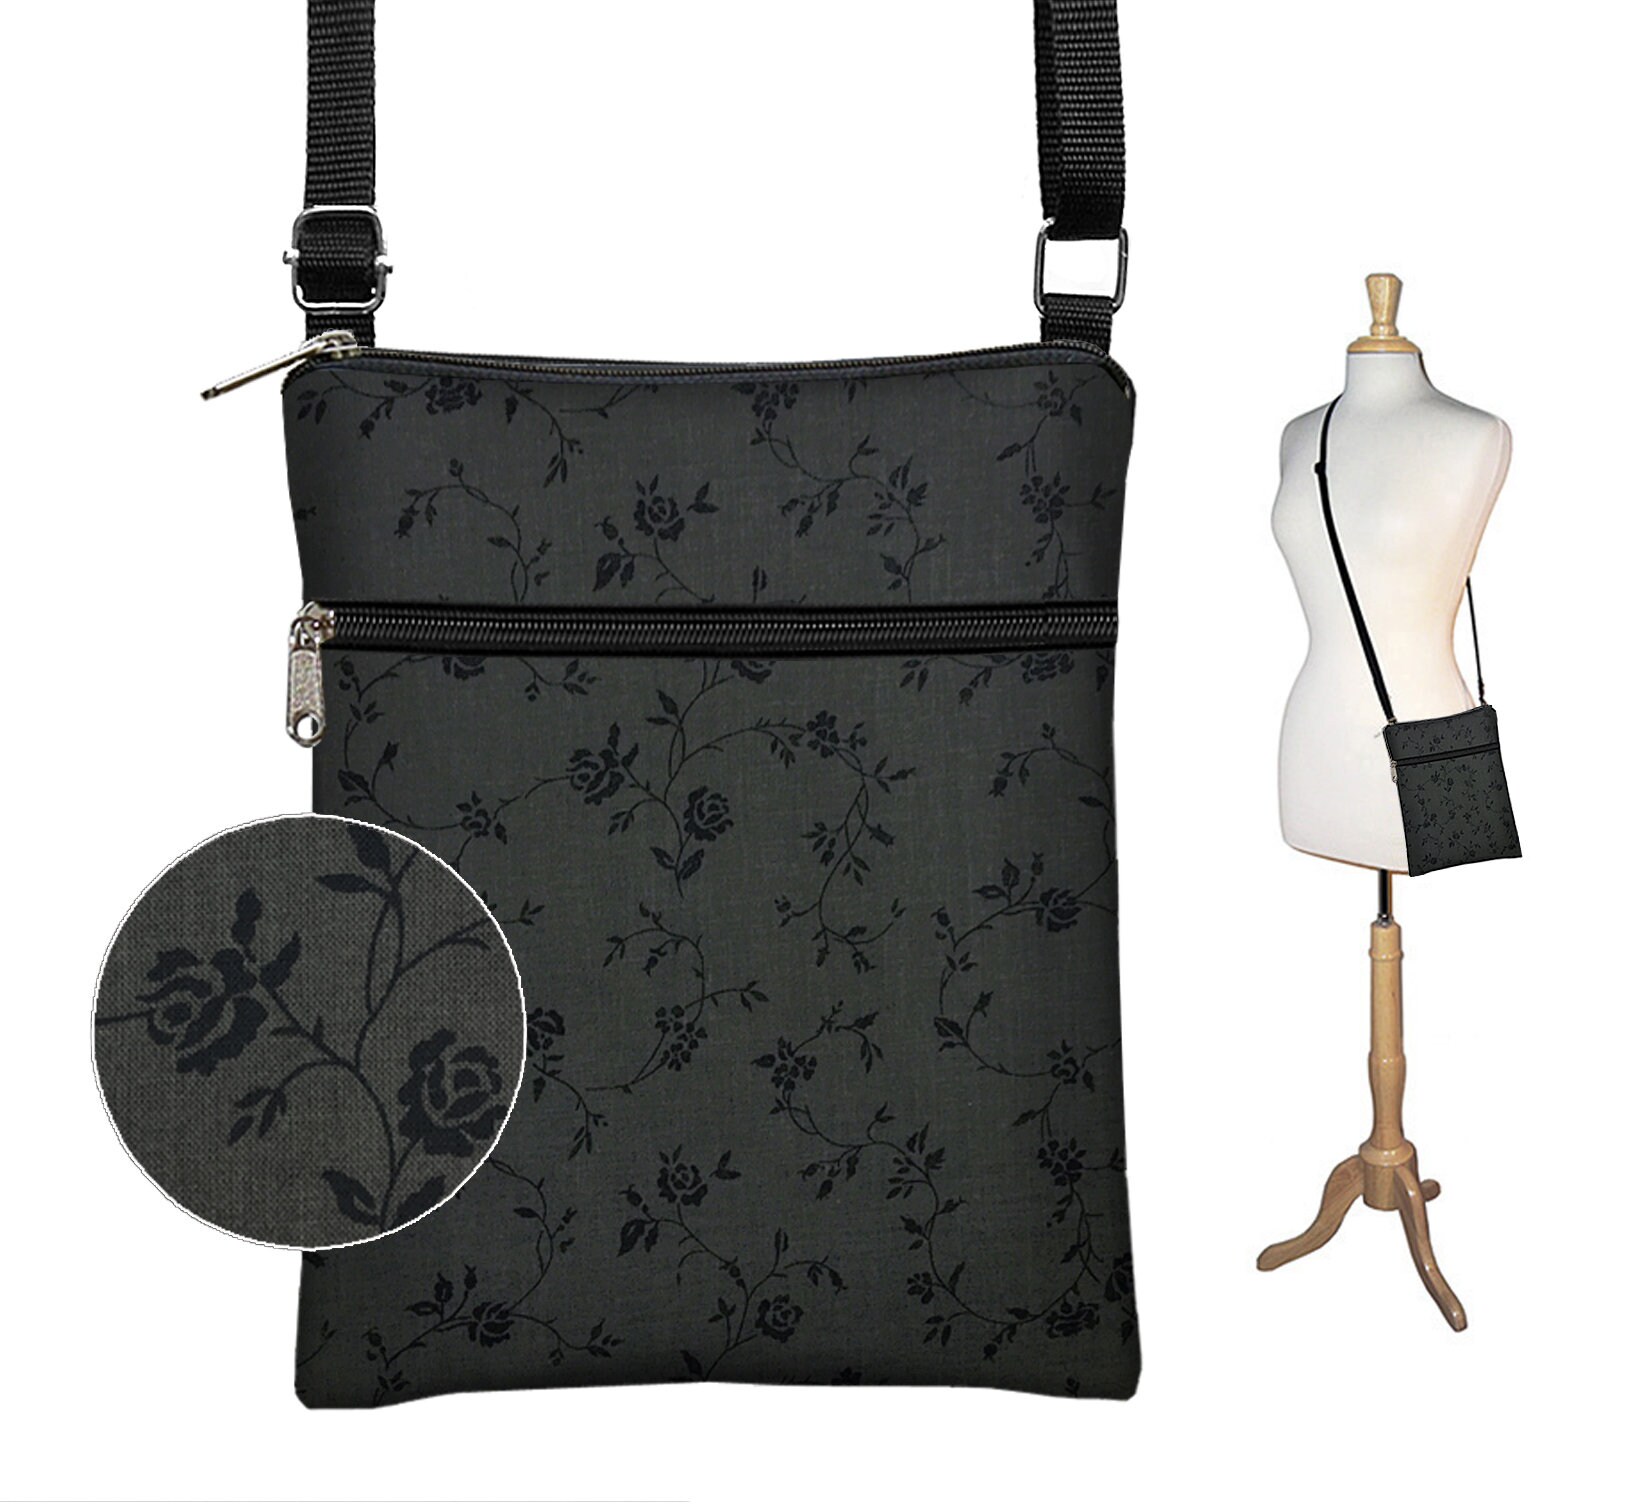 Travel Purse zipper pocket Small Cross Body Purse Shoulder Bag charcoal gray MTO Black Crossbody Bag Rose Vine Floral Fabric Handbag